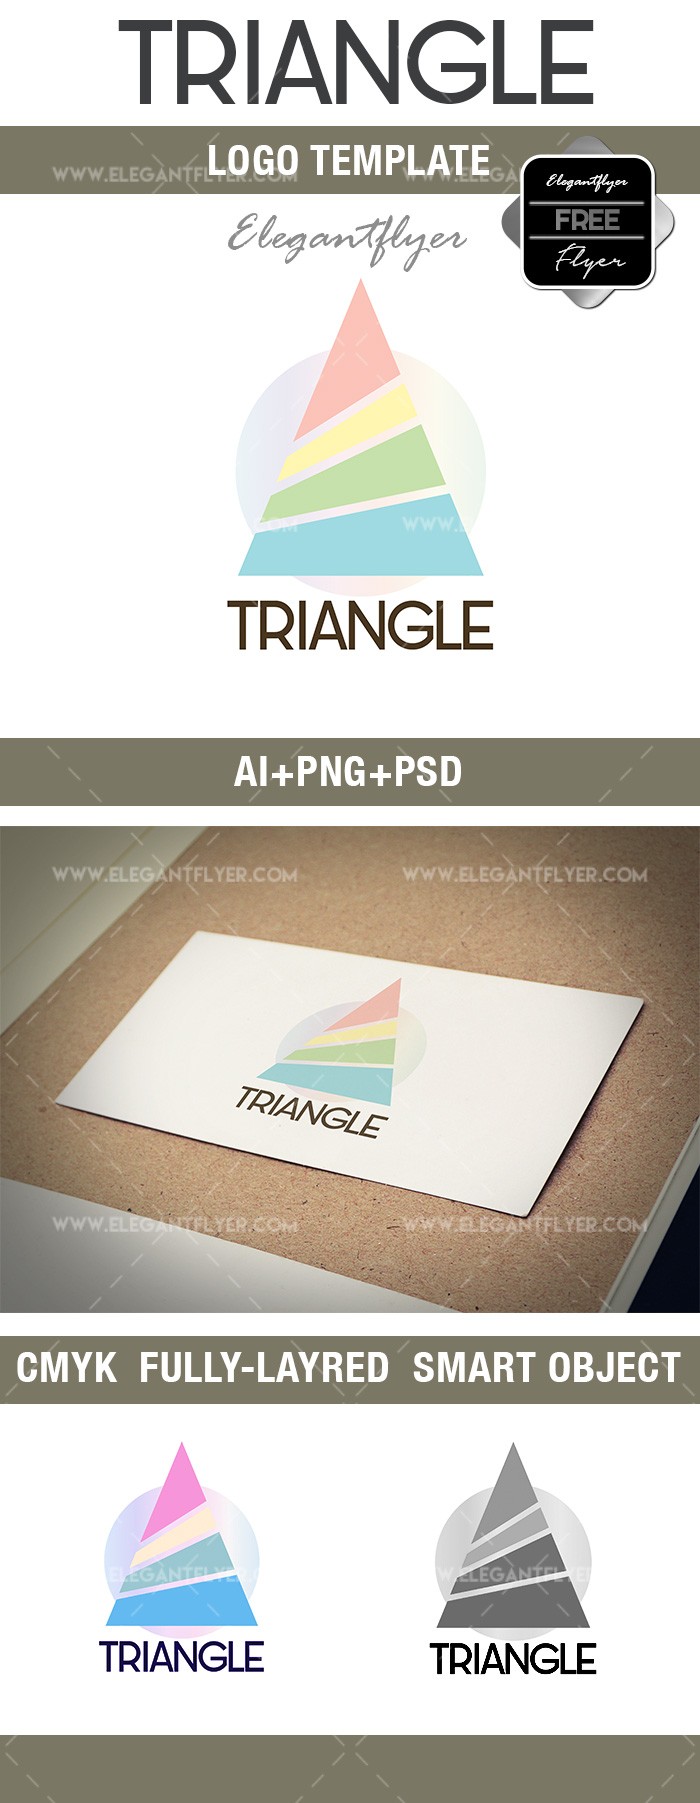 Triangle by ElegantFlyer